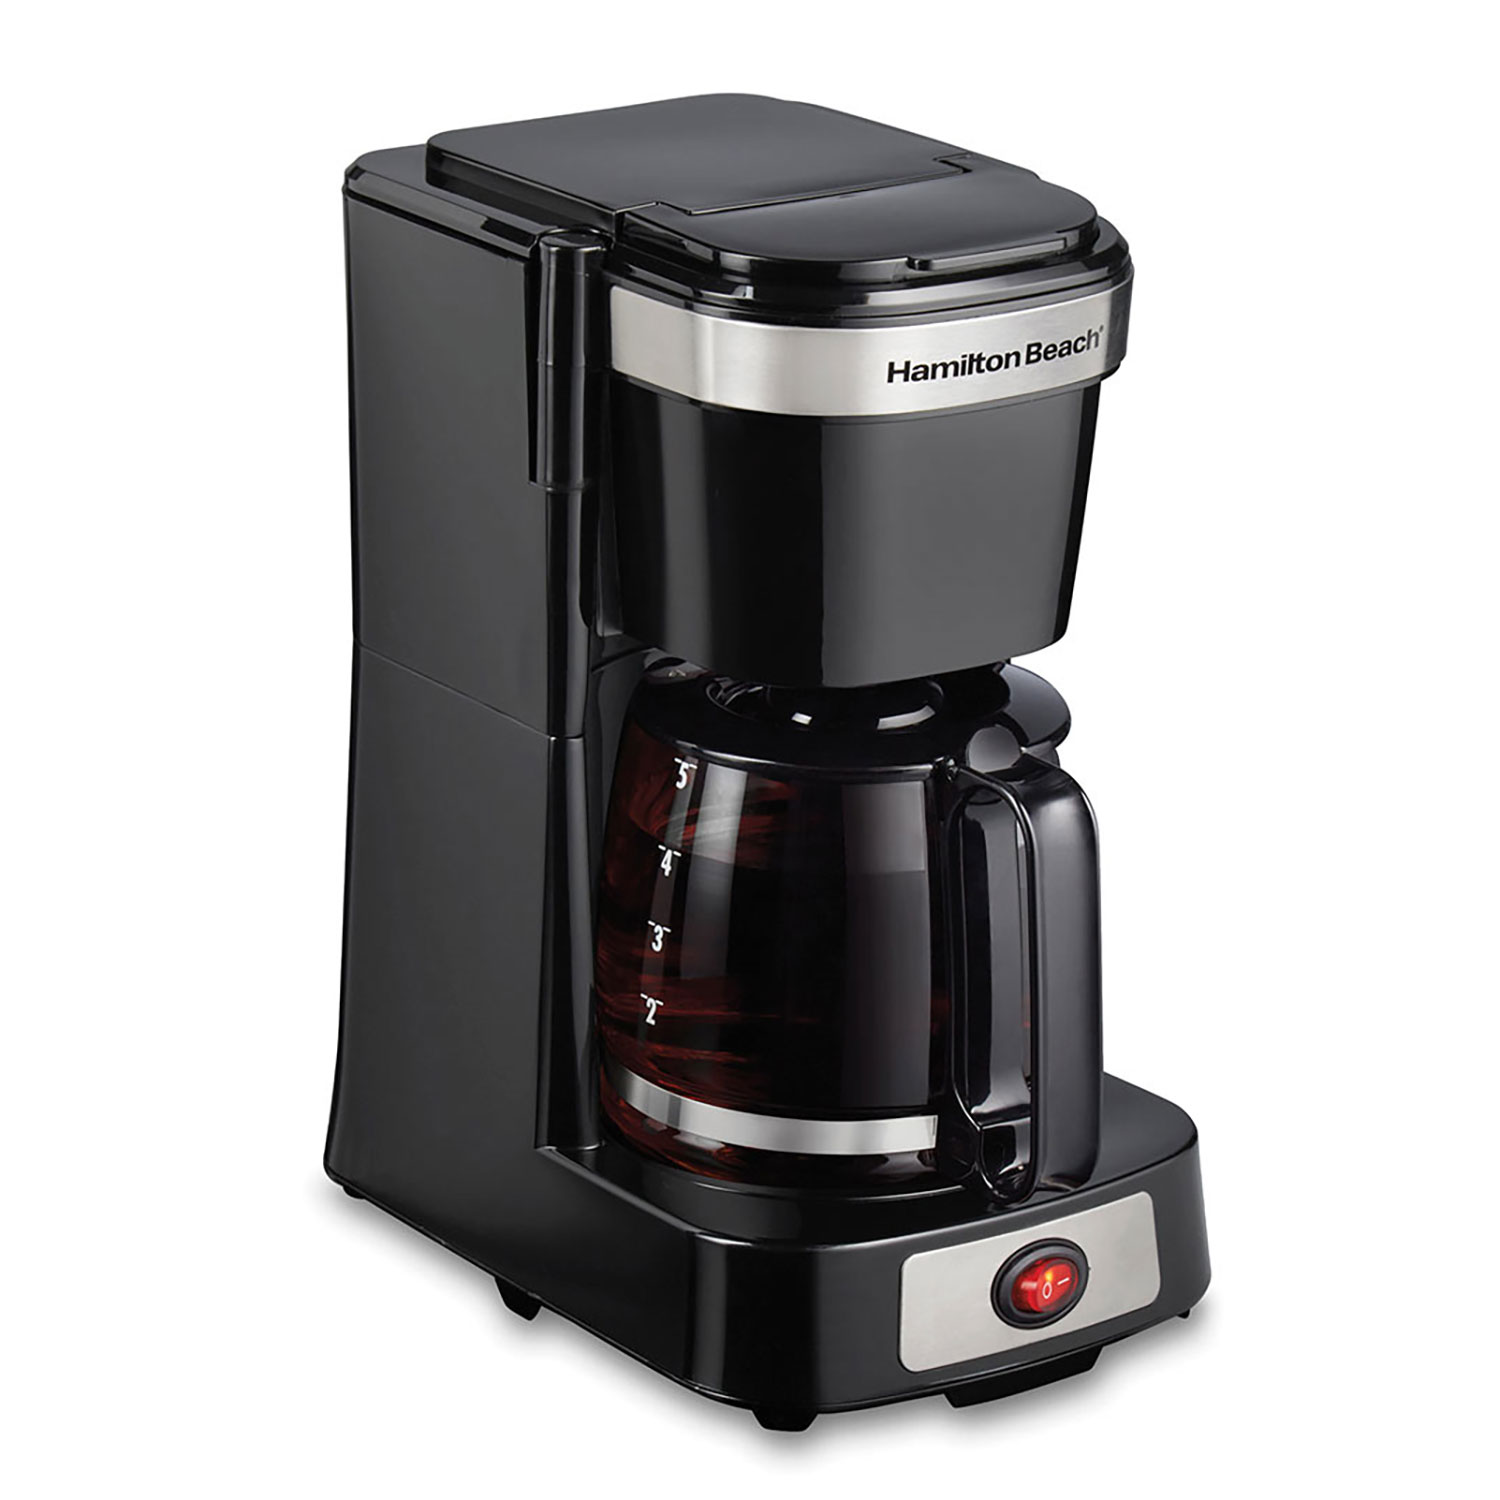 New Hamilton Beach 12 Cup Programmable Coffee Maker Digital Model# 49465R 